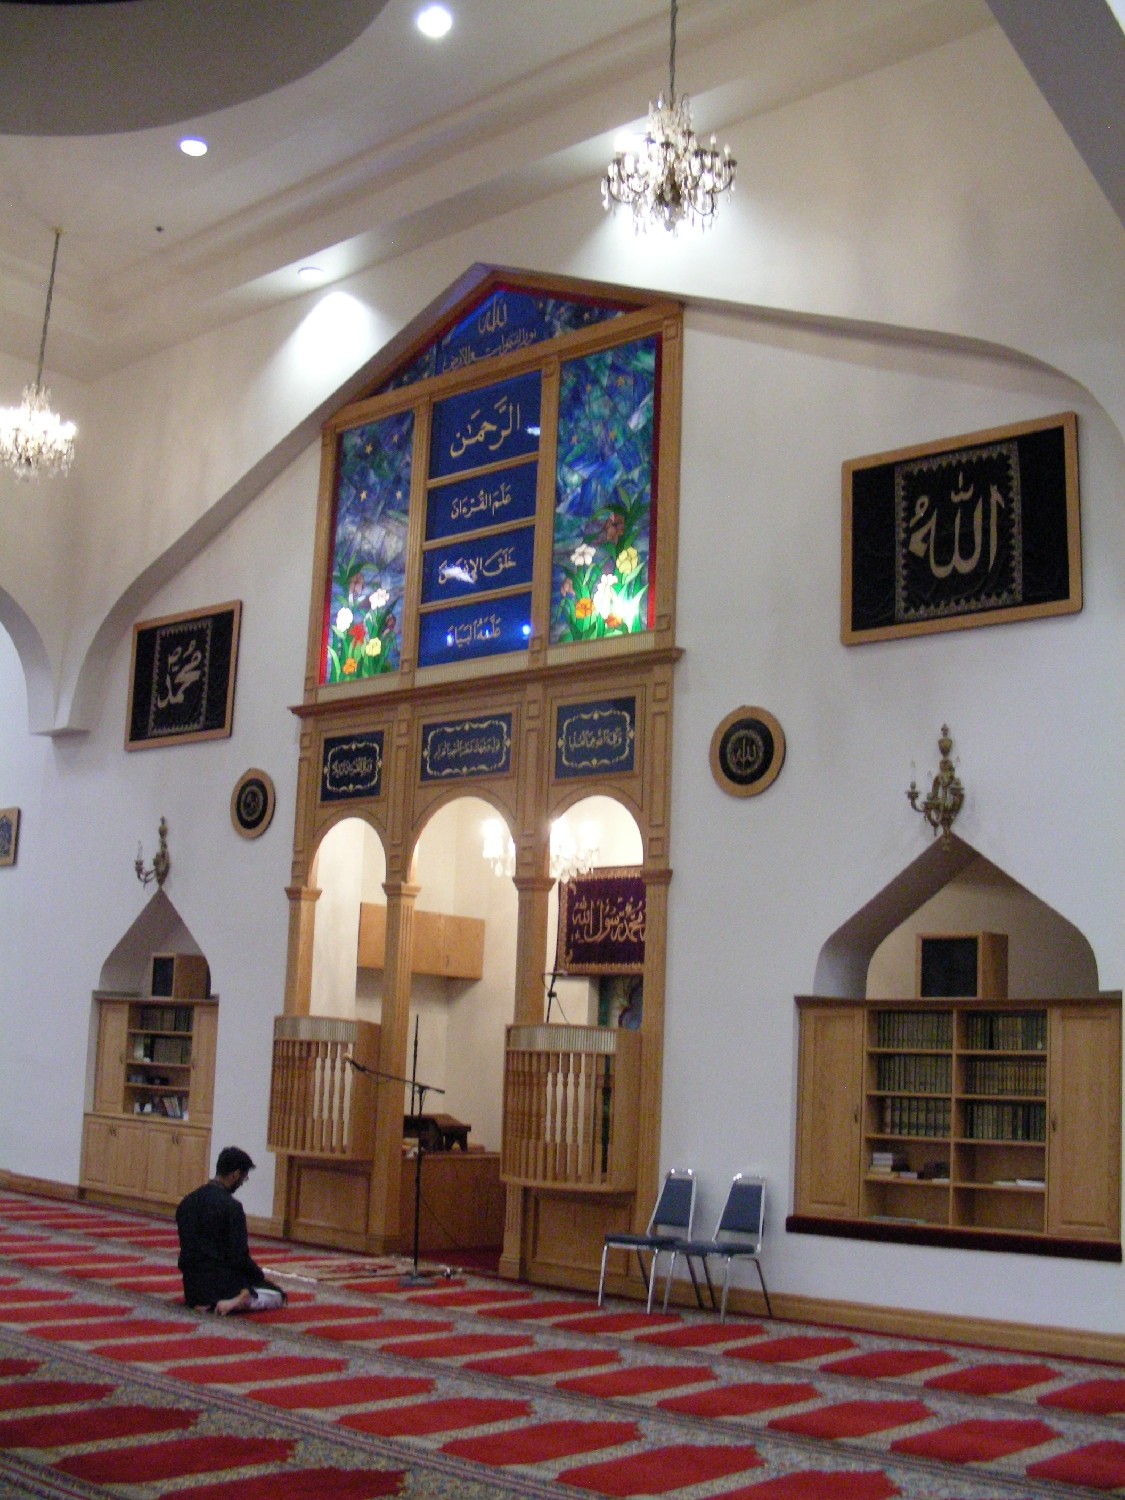 Islamic Society of Orange County - Qibla wall in prayer hall